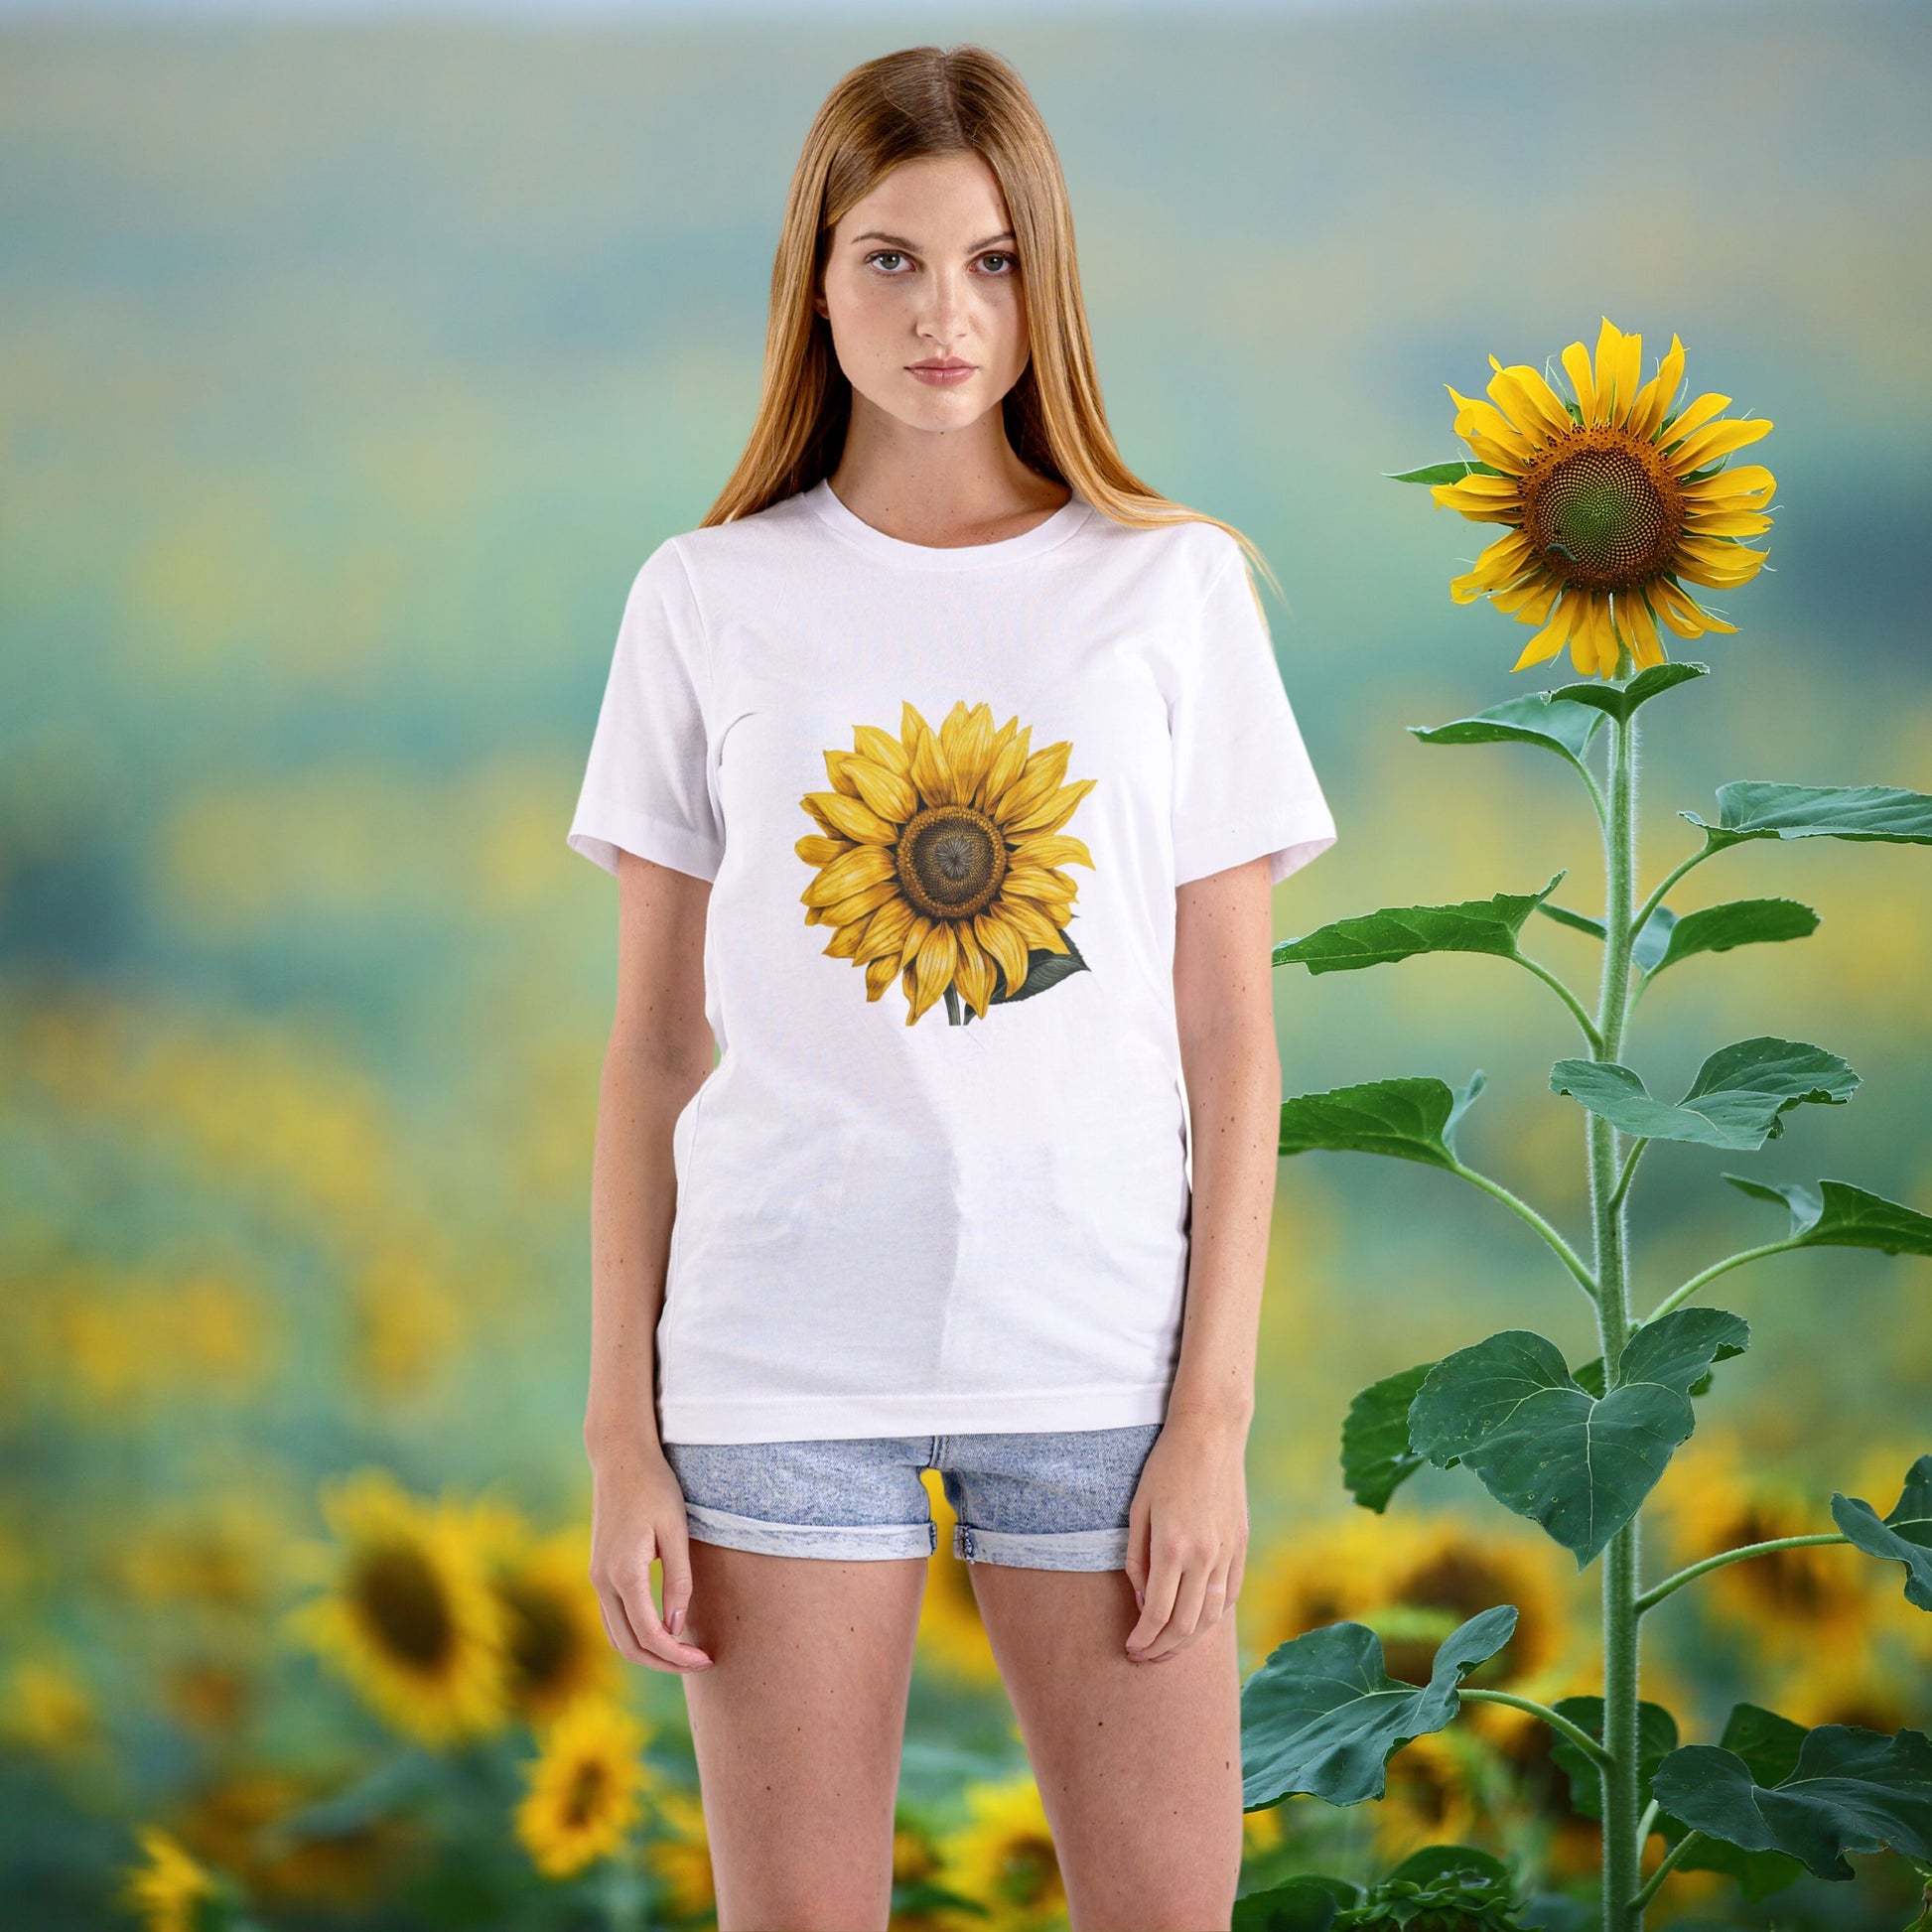 Sunflower Shirt Collection - Floral Tee, Garden Shirt, and Women's Fall Fashion Staples T-Shirt   